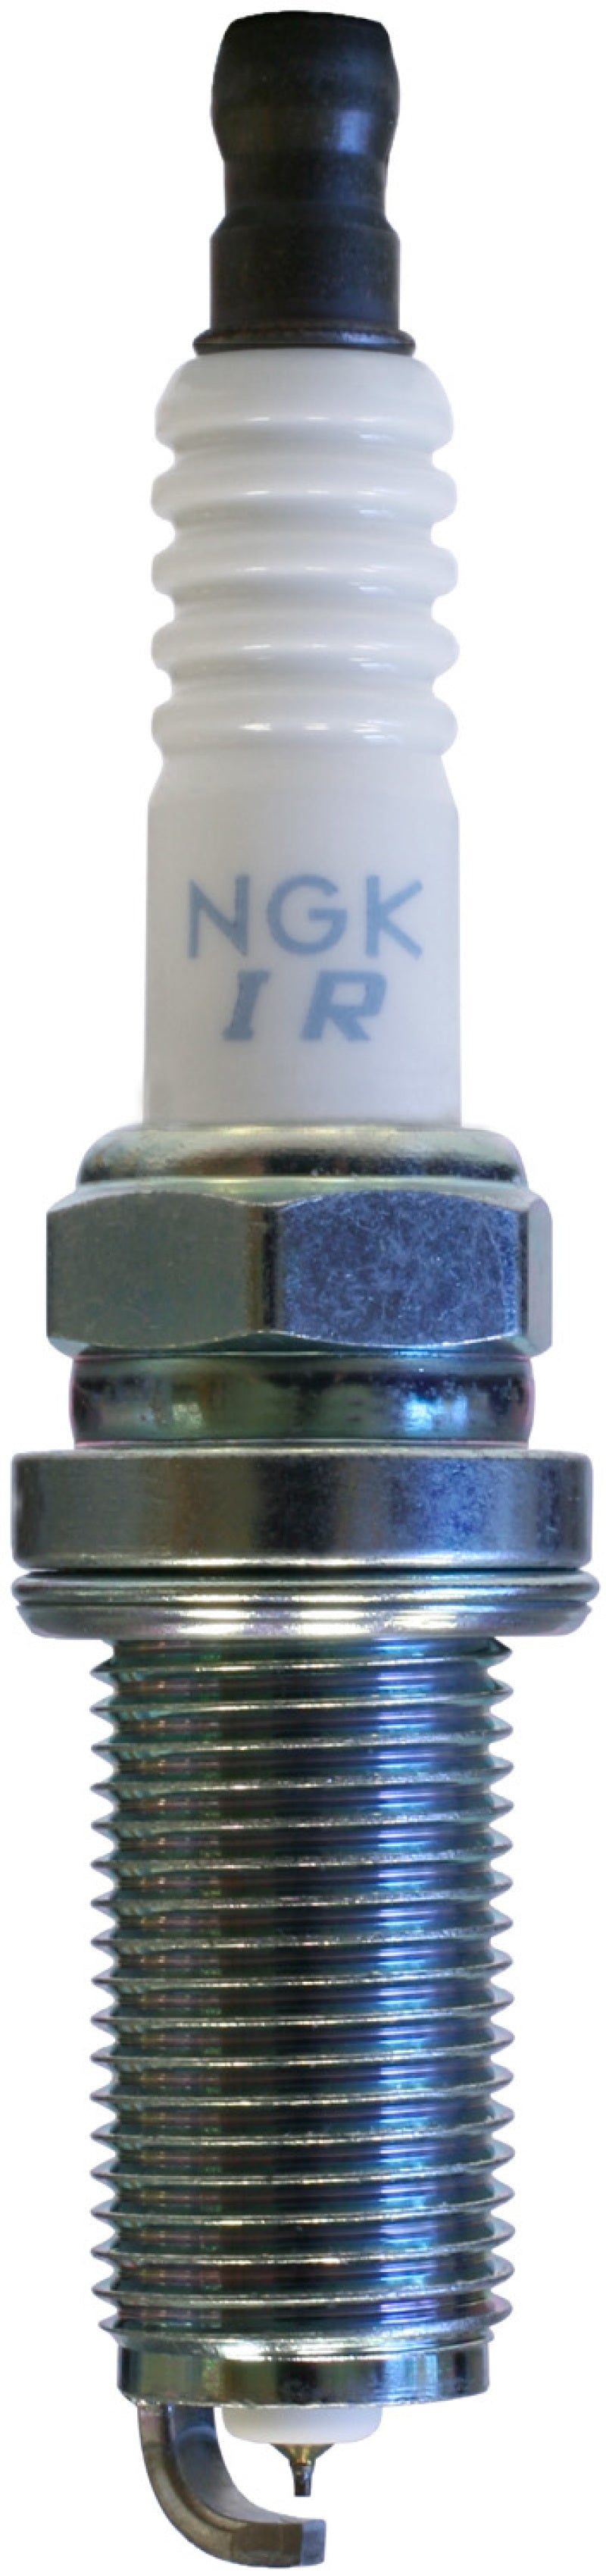 NGK Laser Iridium Long Life Spark Plug Box of 4 (SILFR6A).